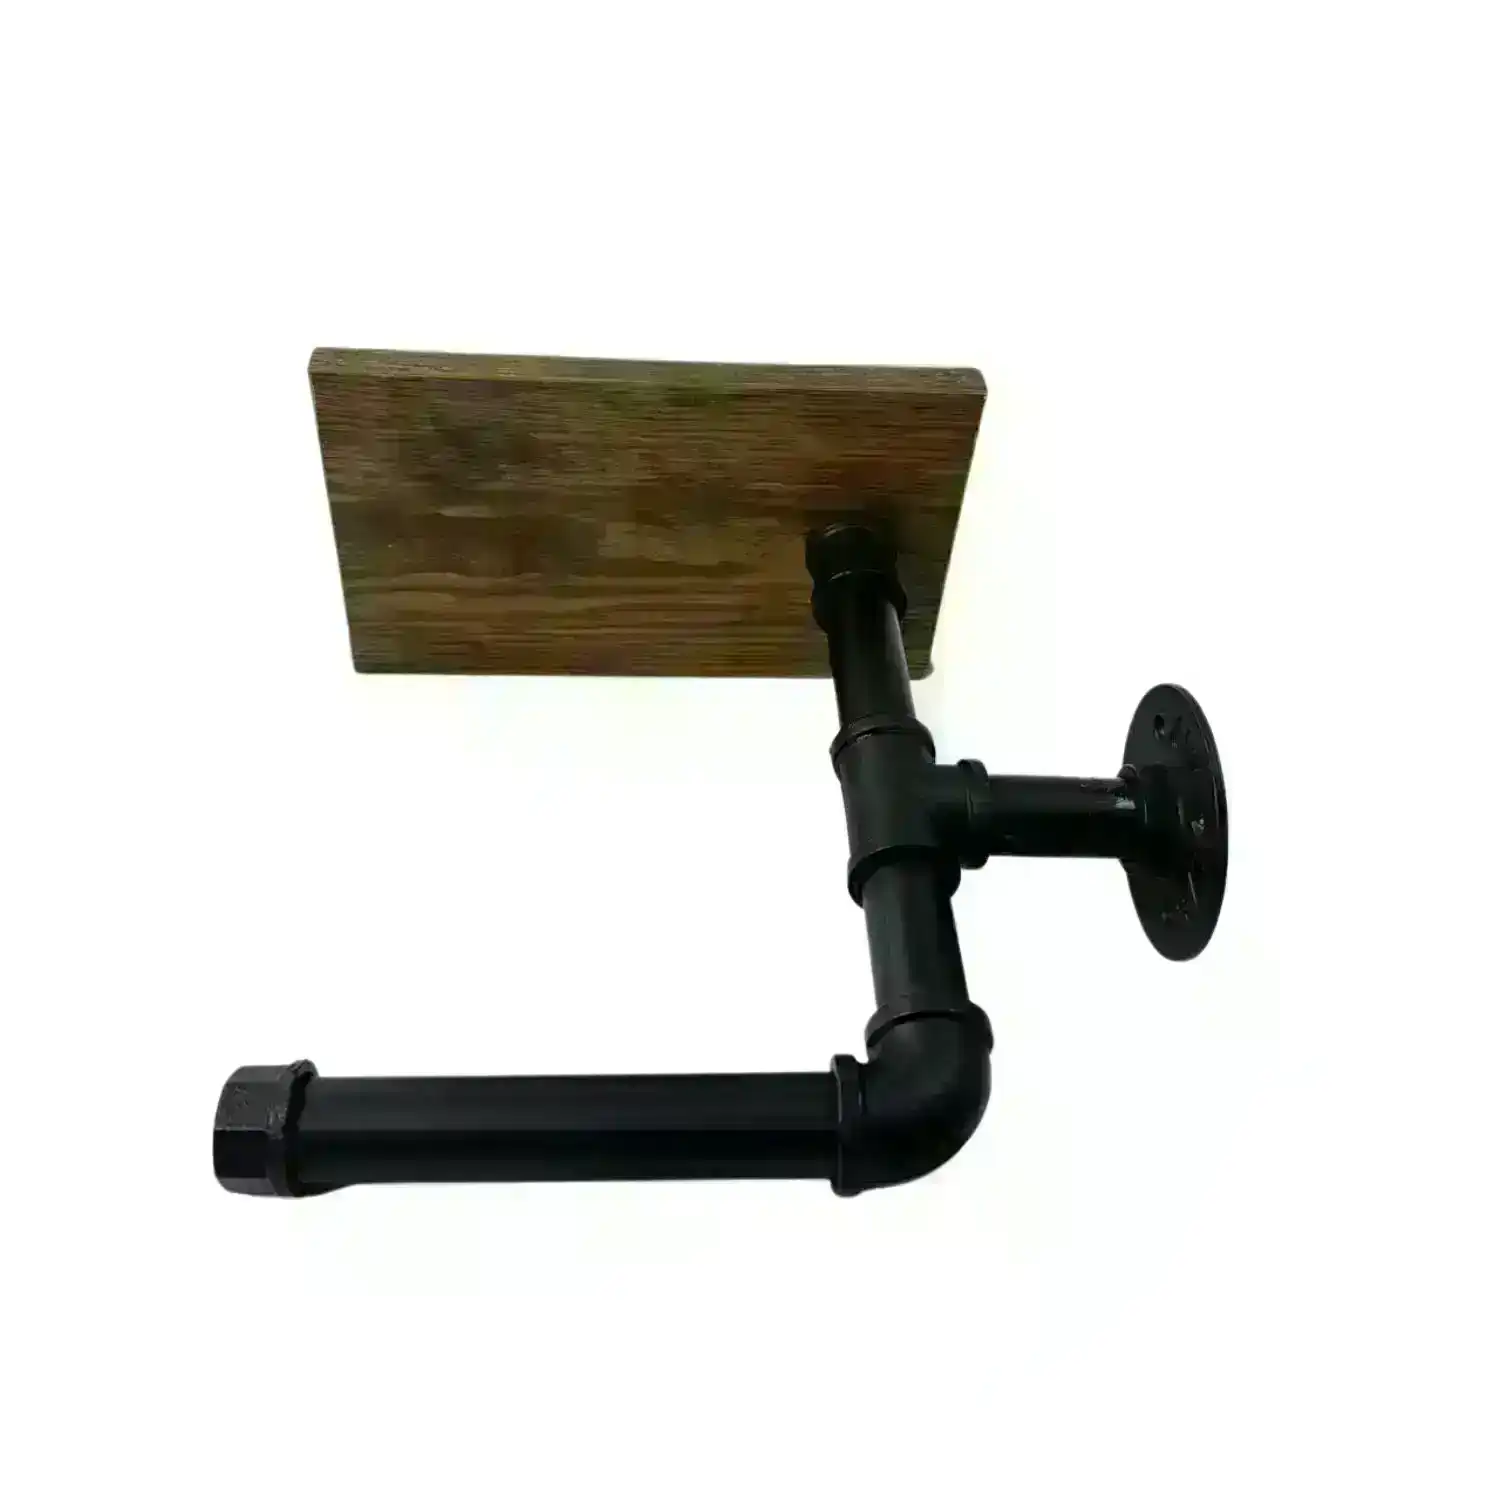 Ekkio Adjustable Industrial Pipe Toilet Paper Roll Holder with Phone Shelf